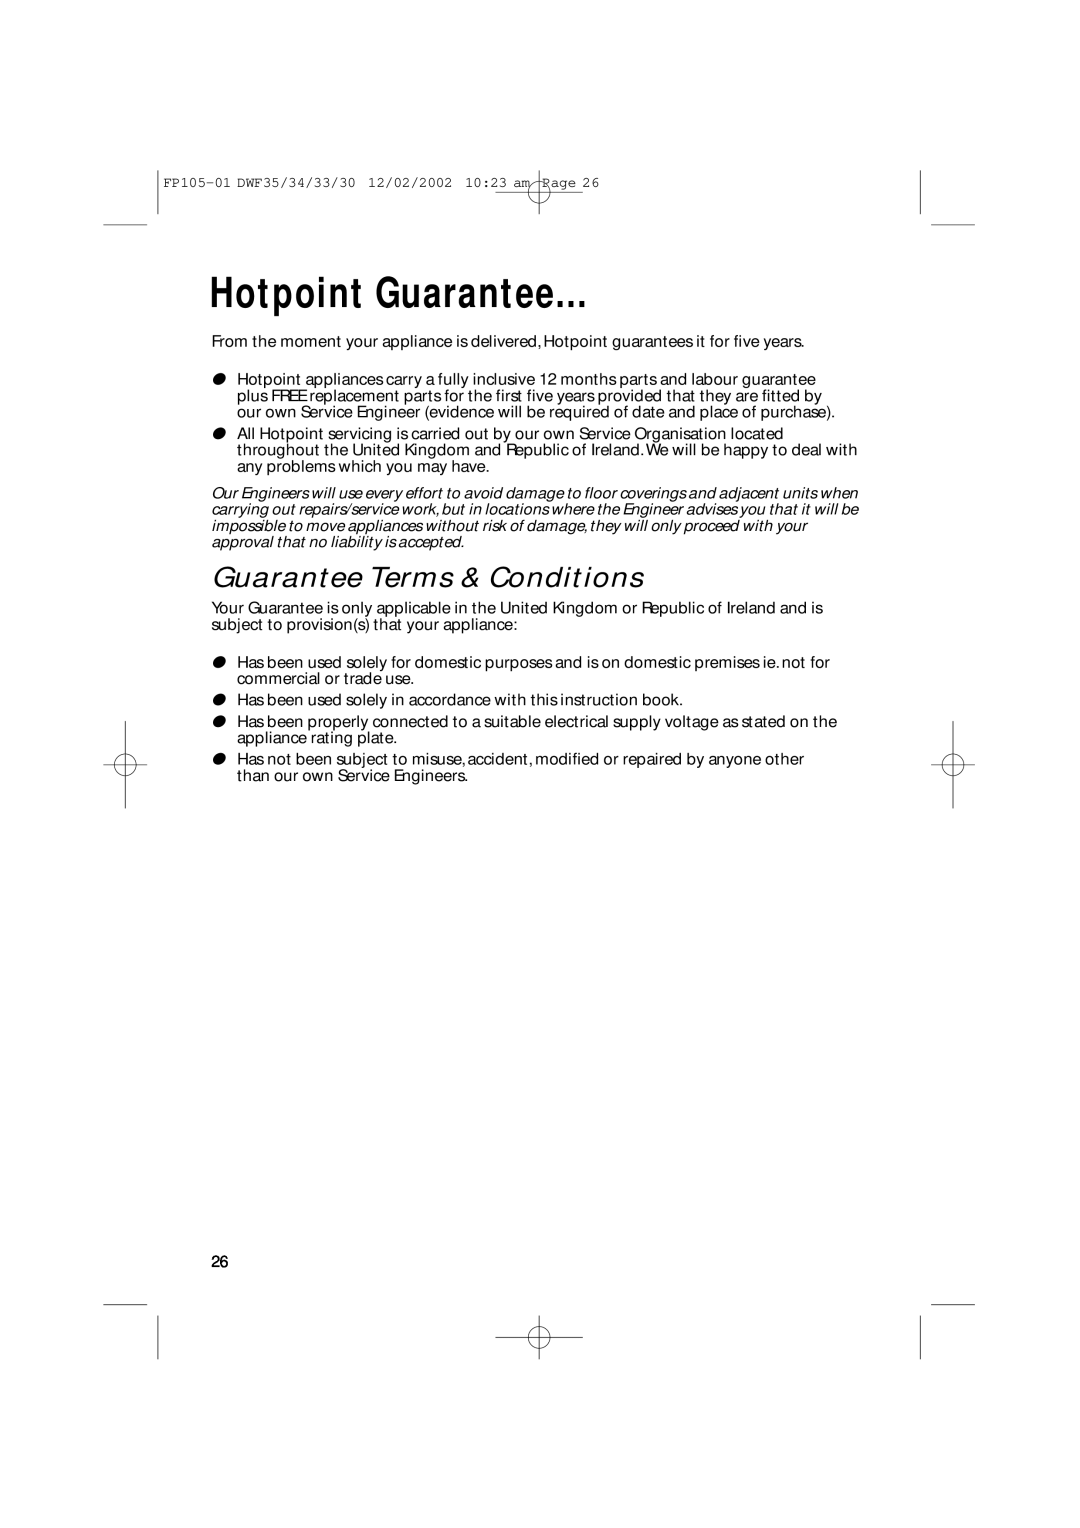 Hotpoint DWF30, DWF35, DWF34, DWF33 installation instructions Hotpoint Guarantee, Guarantee Terms & Conditions 